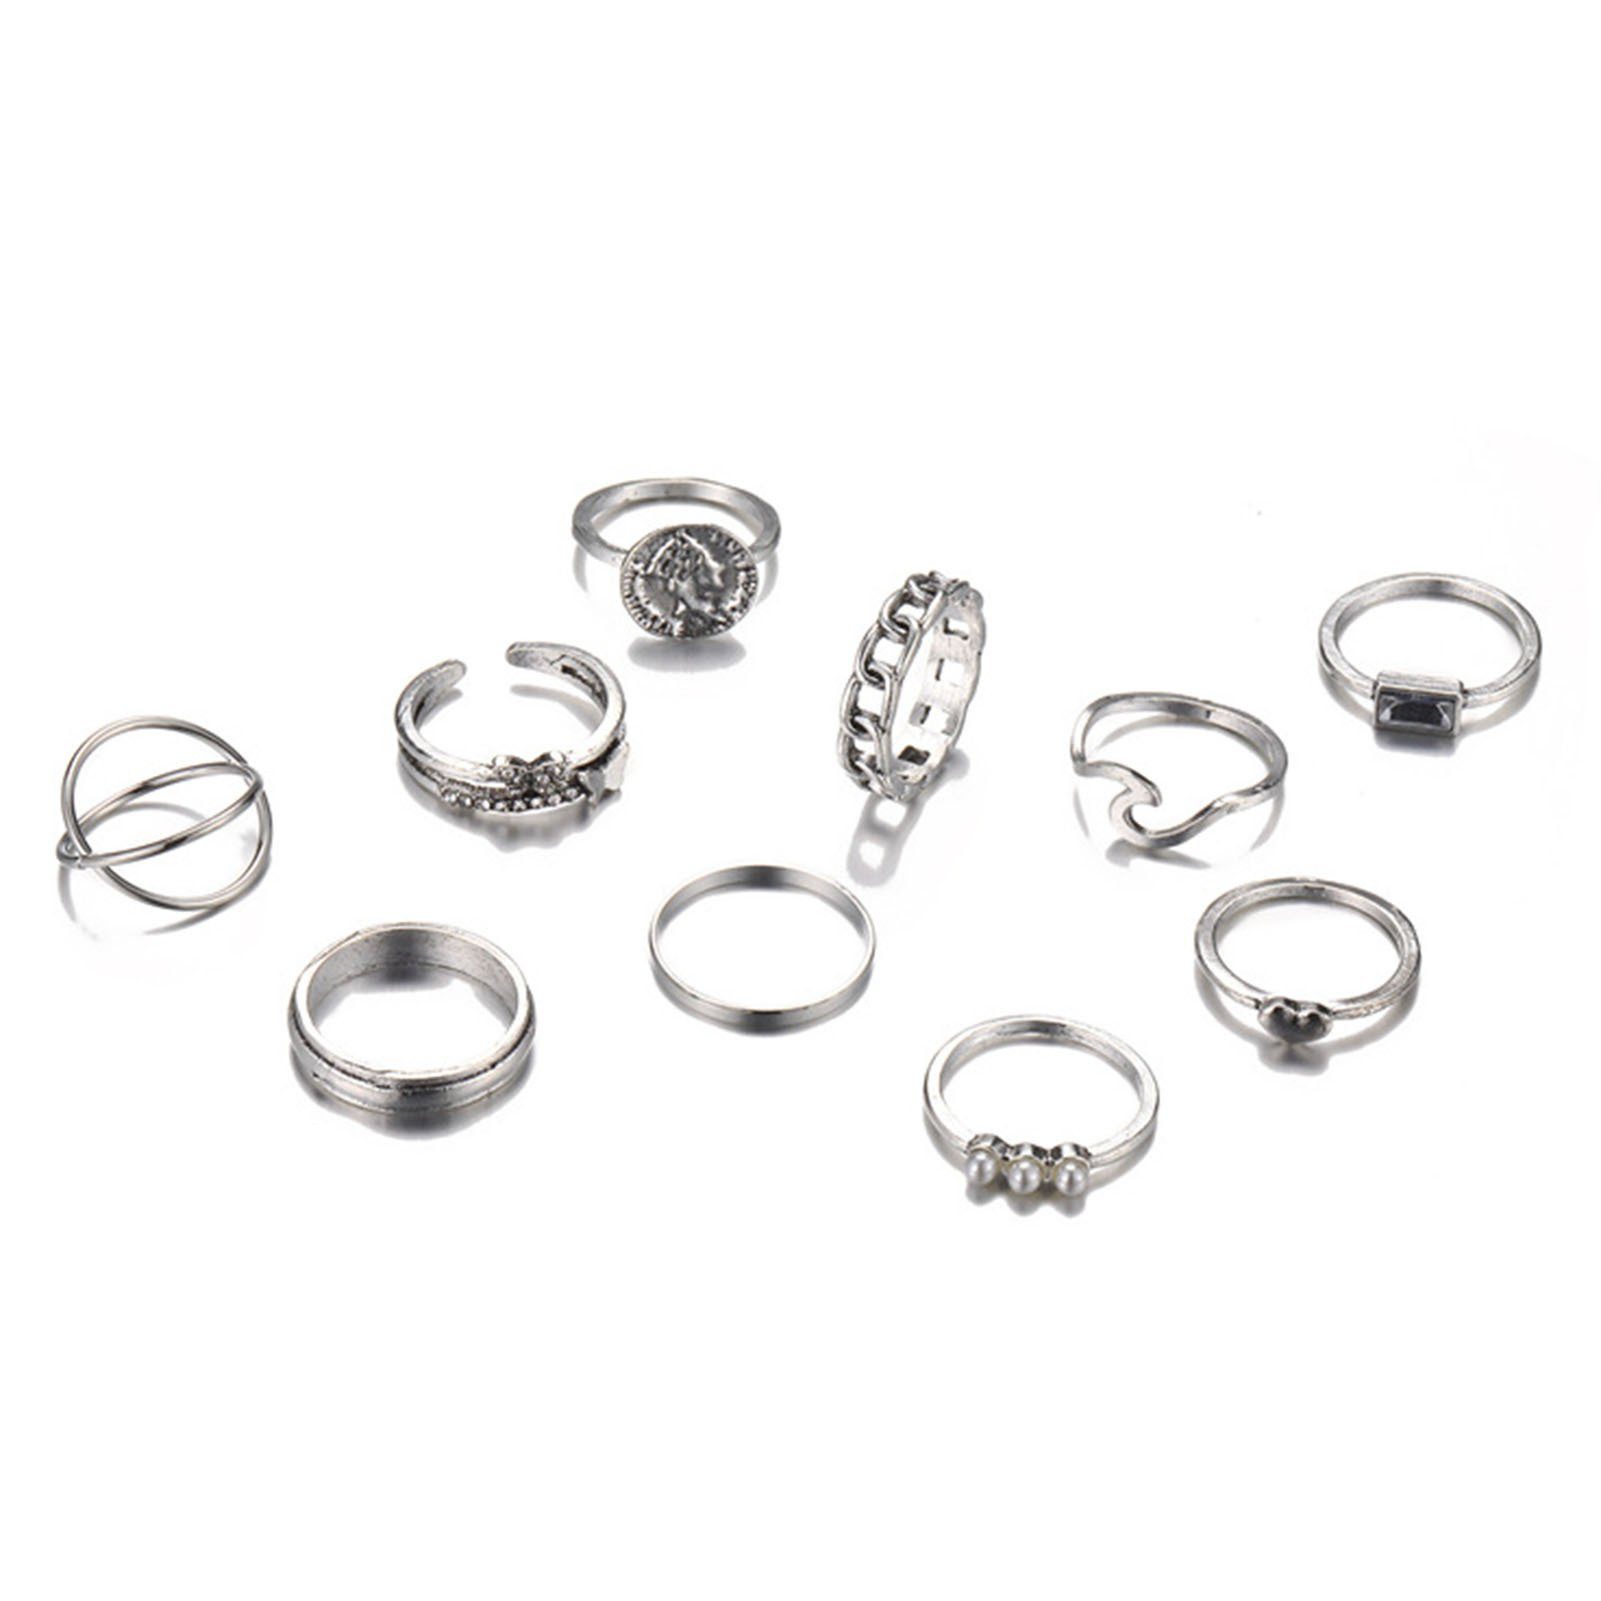 Blusmart Ring-Set 10 Stück Beliebte Damenringe, Exquisite, Bezaubernde Ringe, Ring-Set